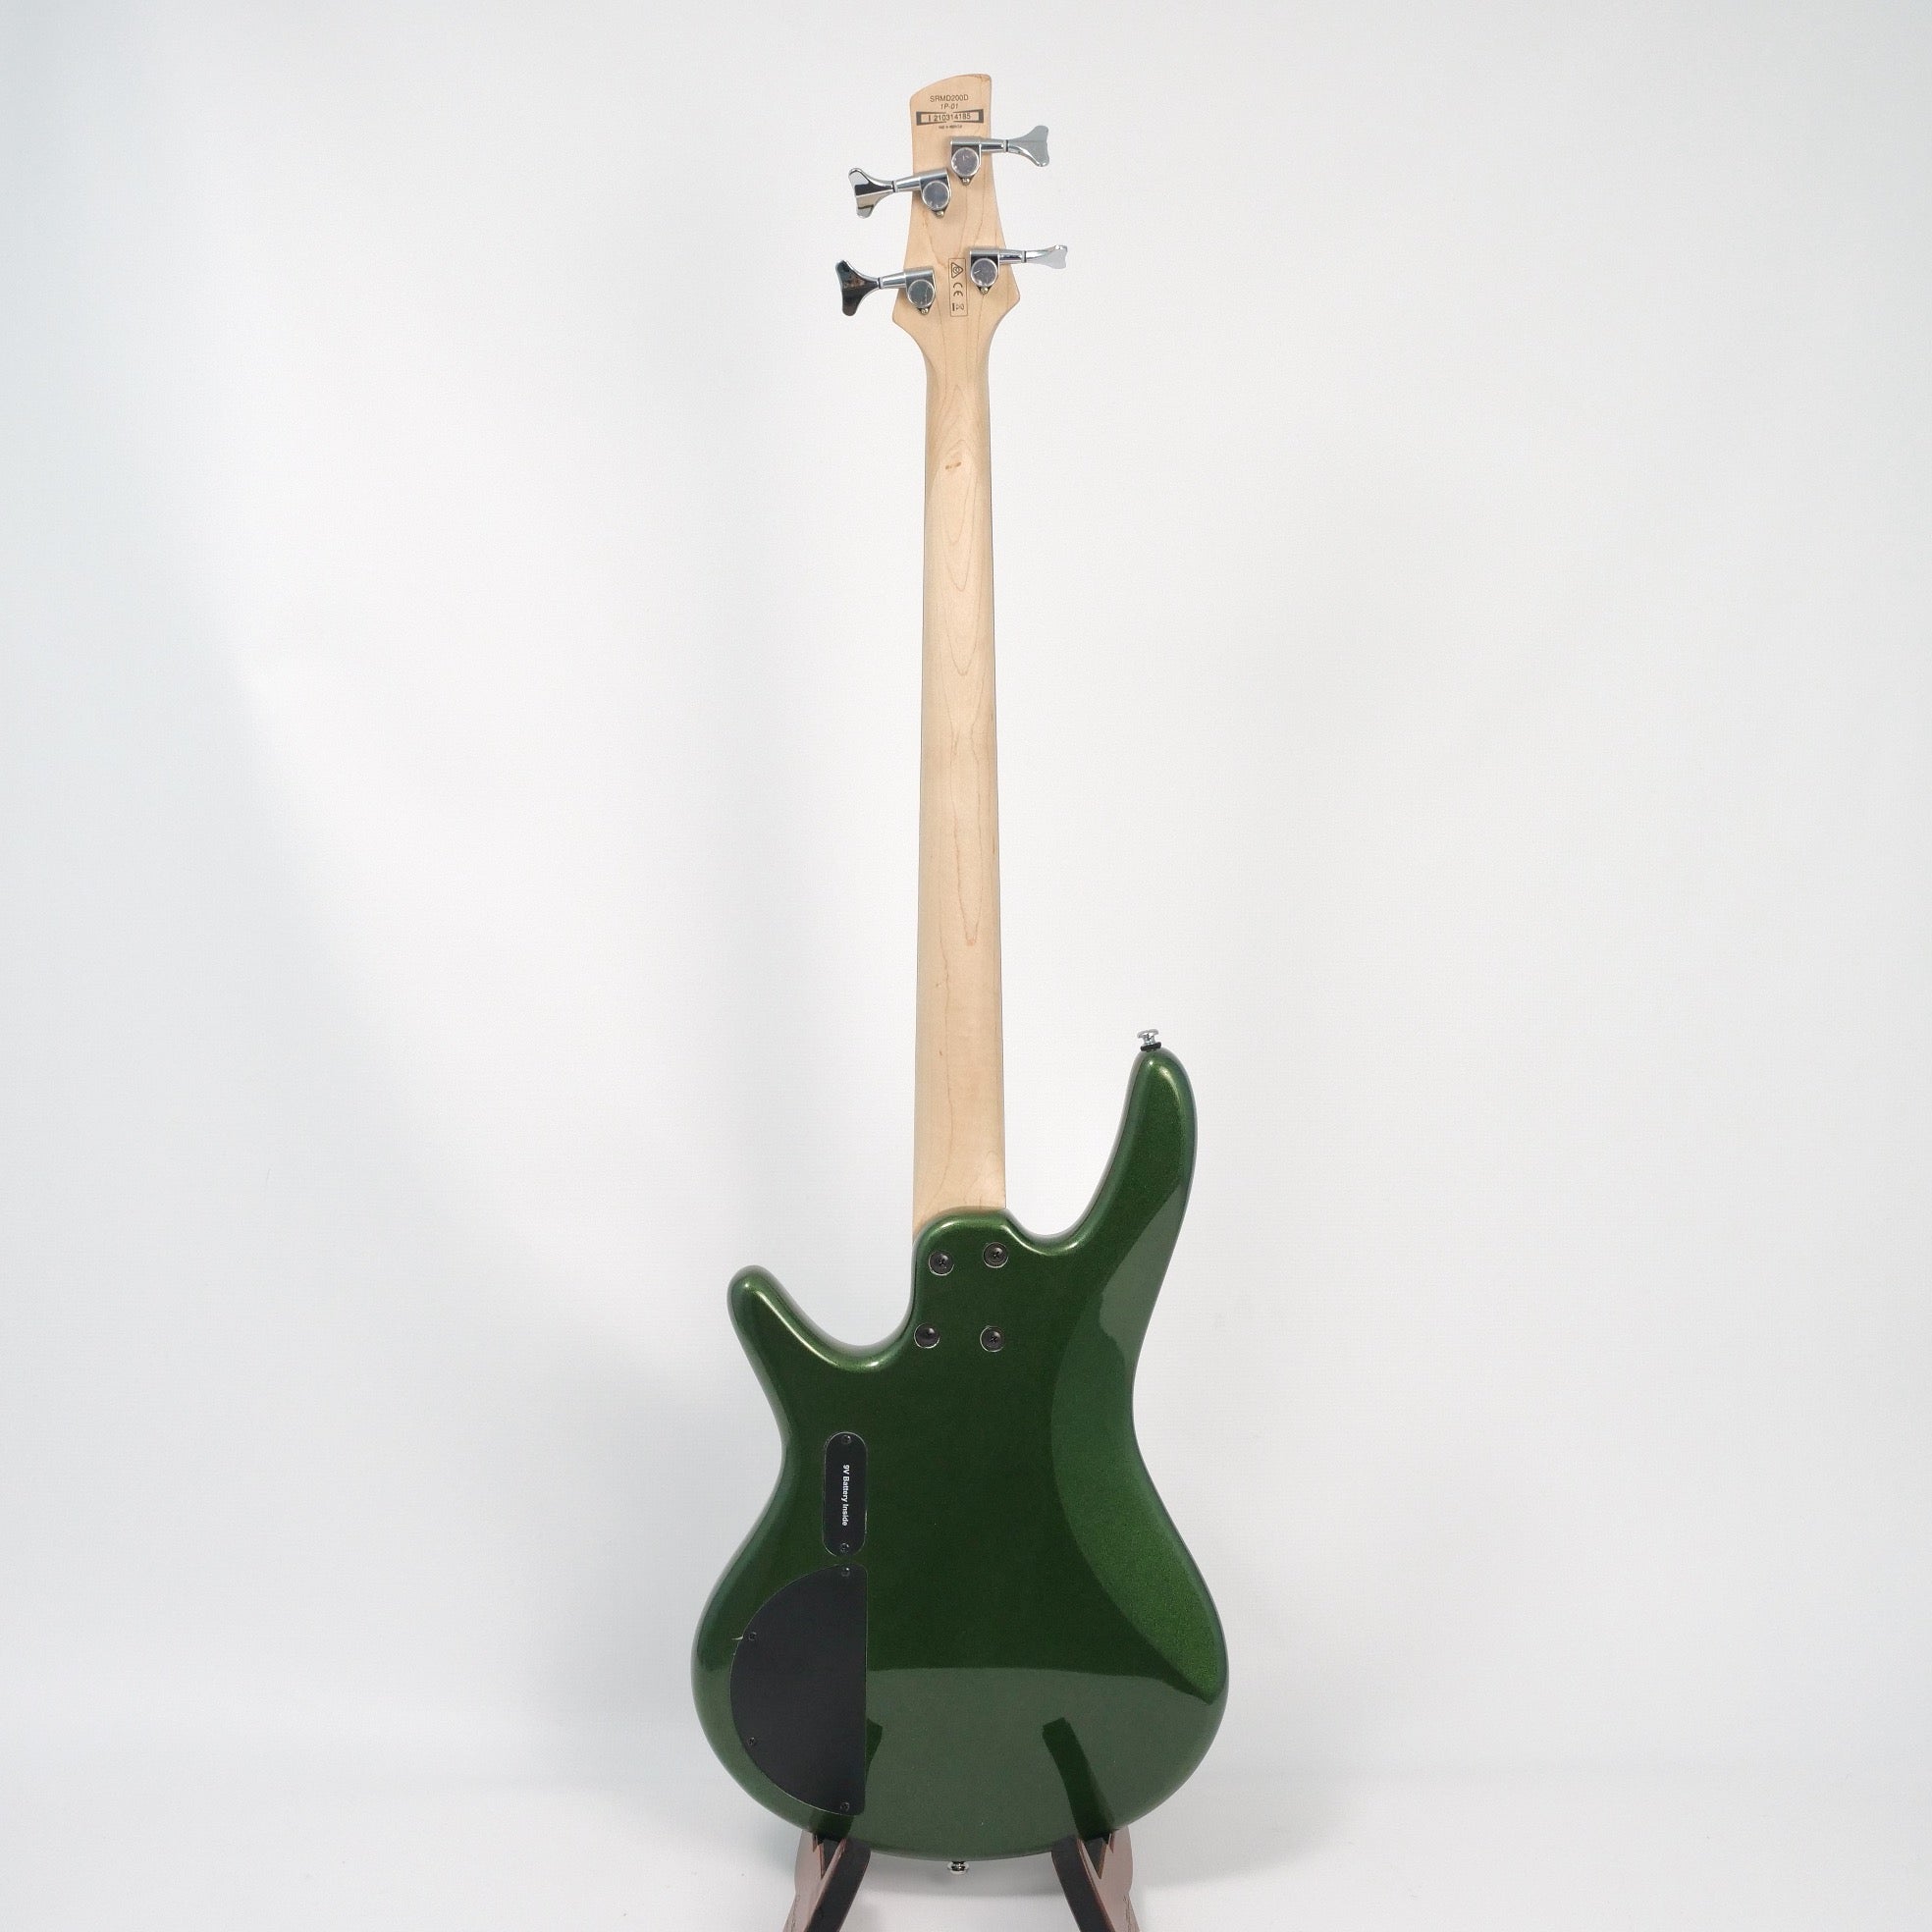 Ibanez SRMD200DMFT 4-String Bass Guitar - Metallic Forest Green Back